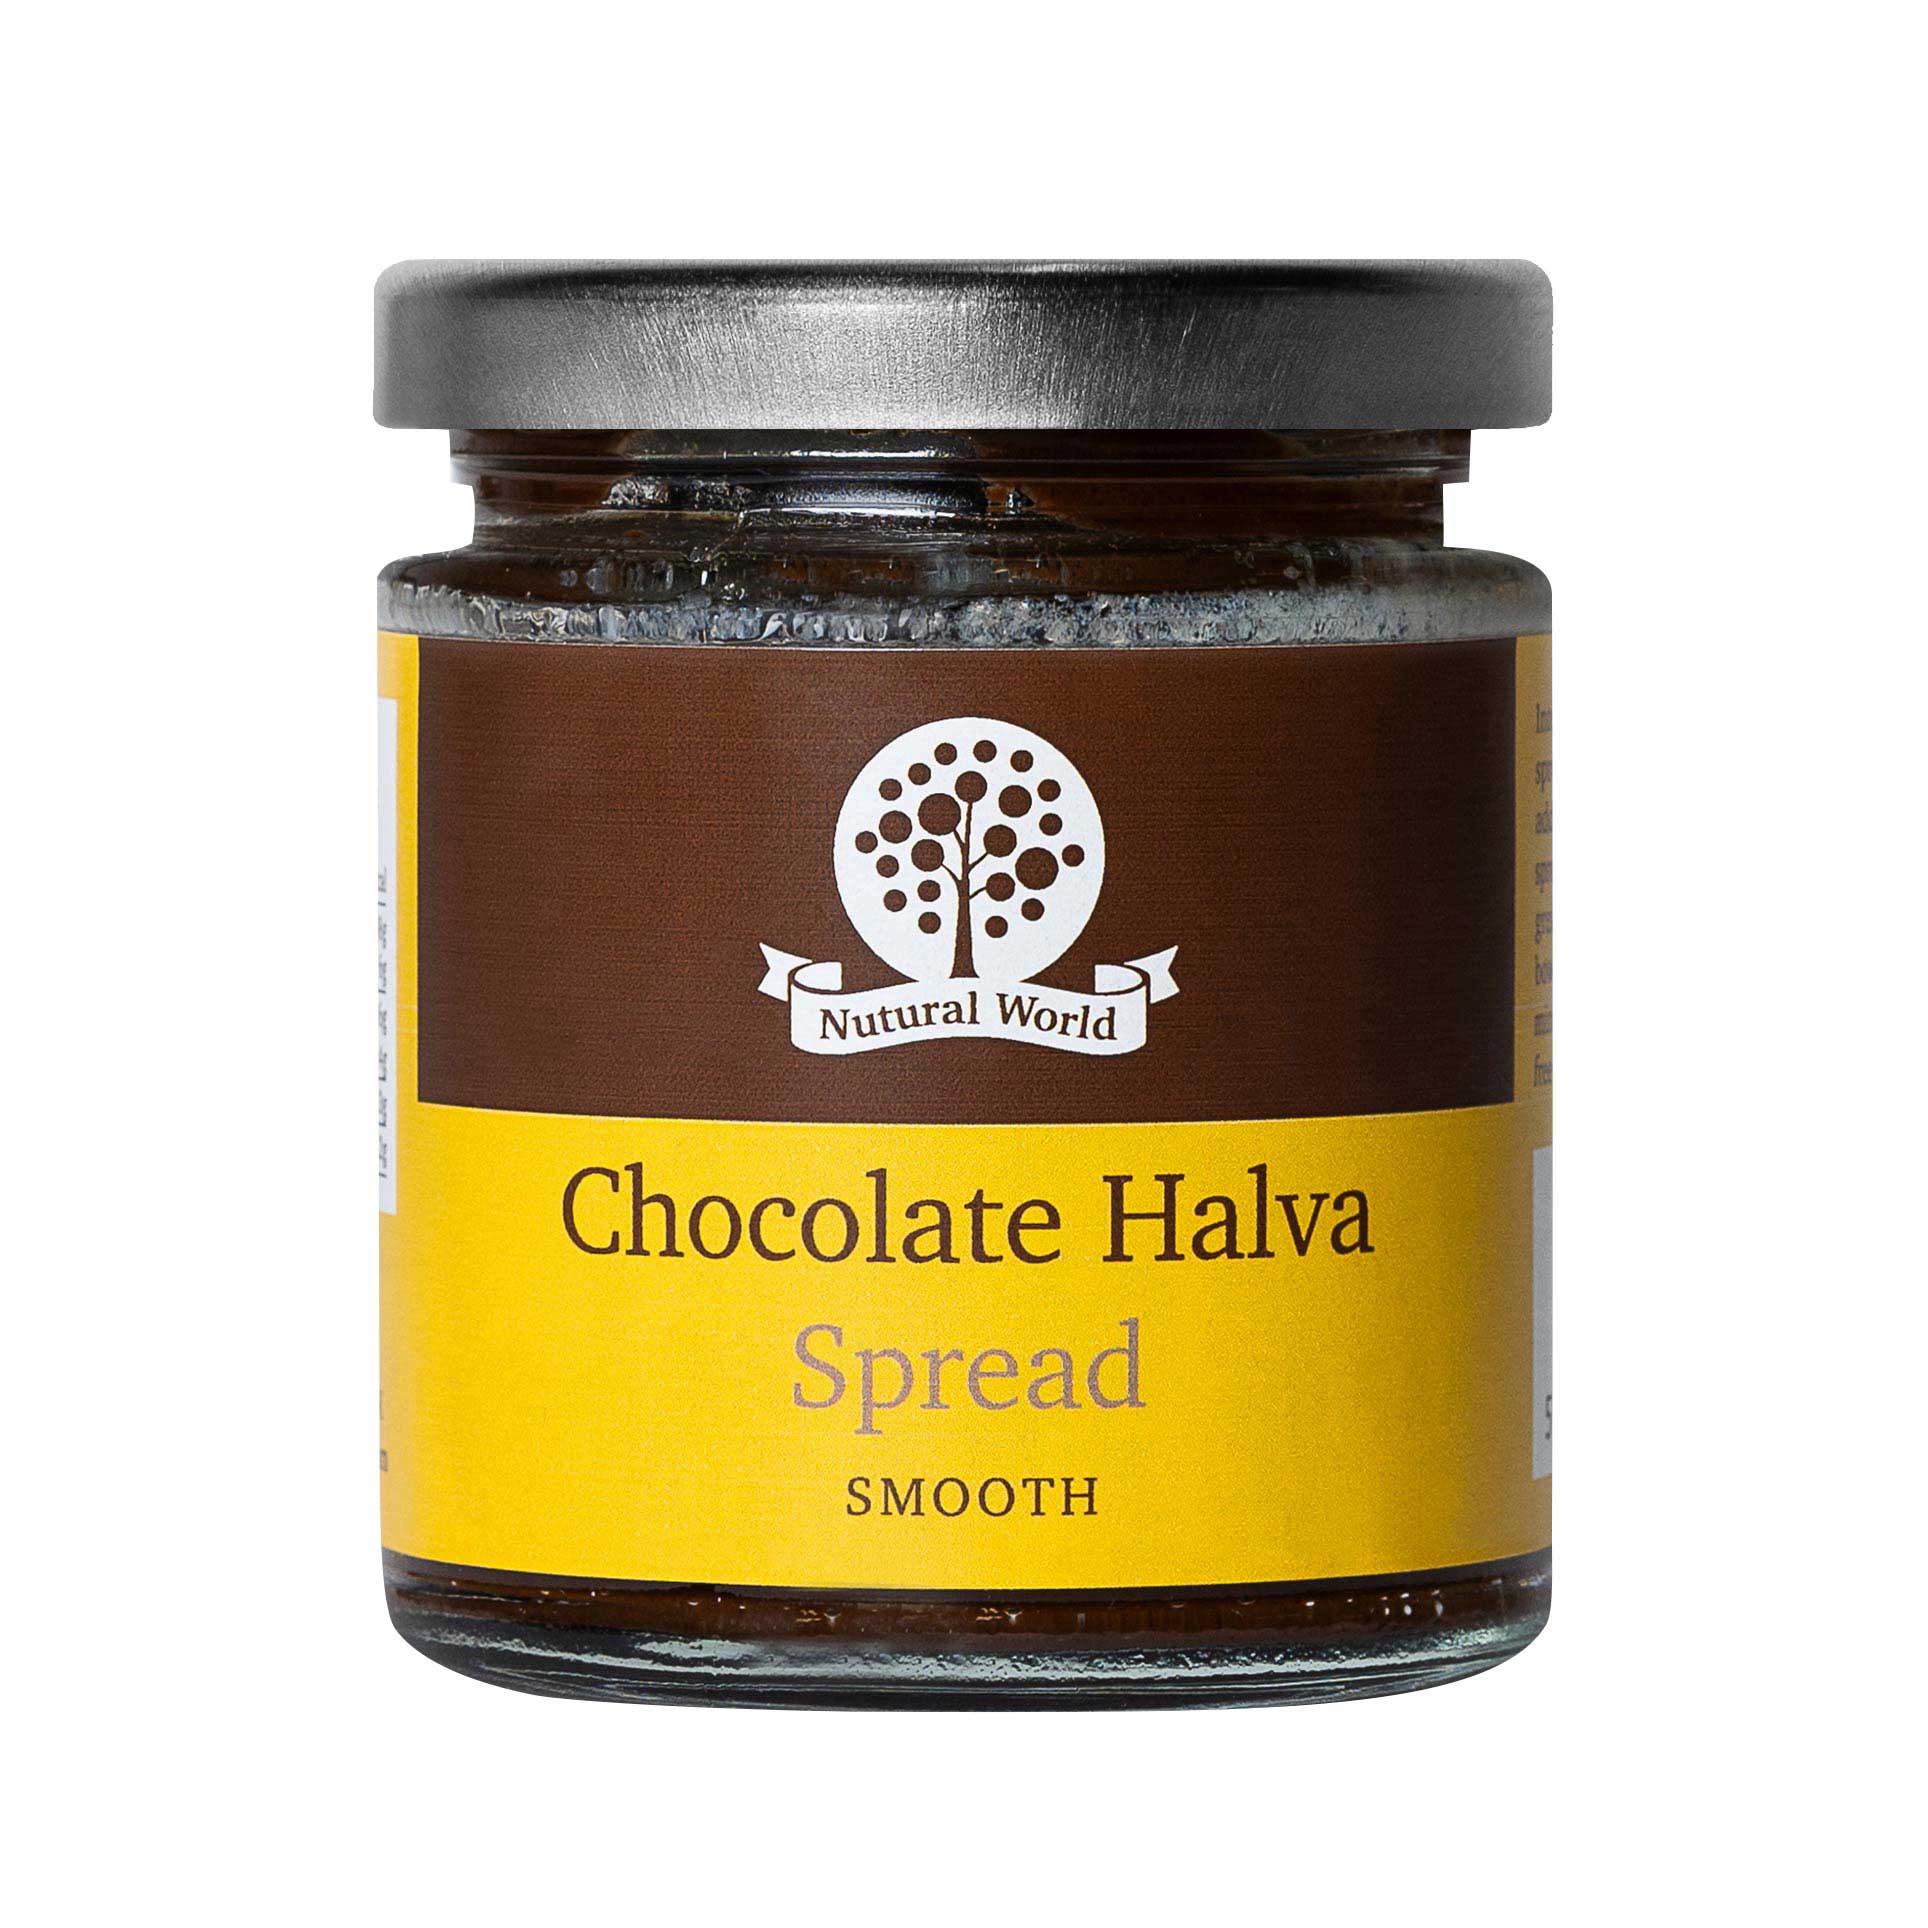 Chocolate Halva spread